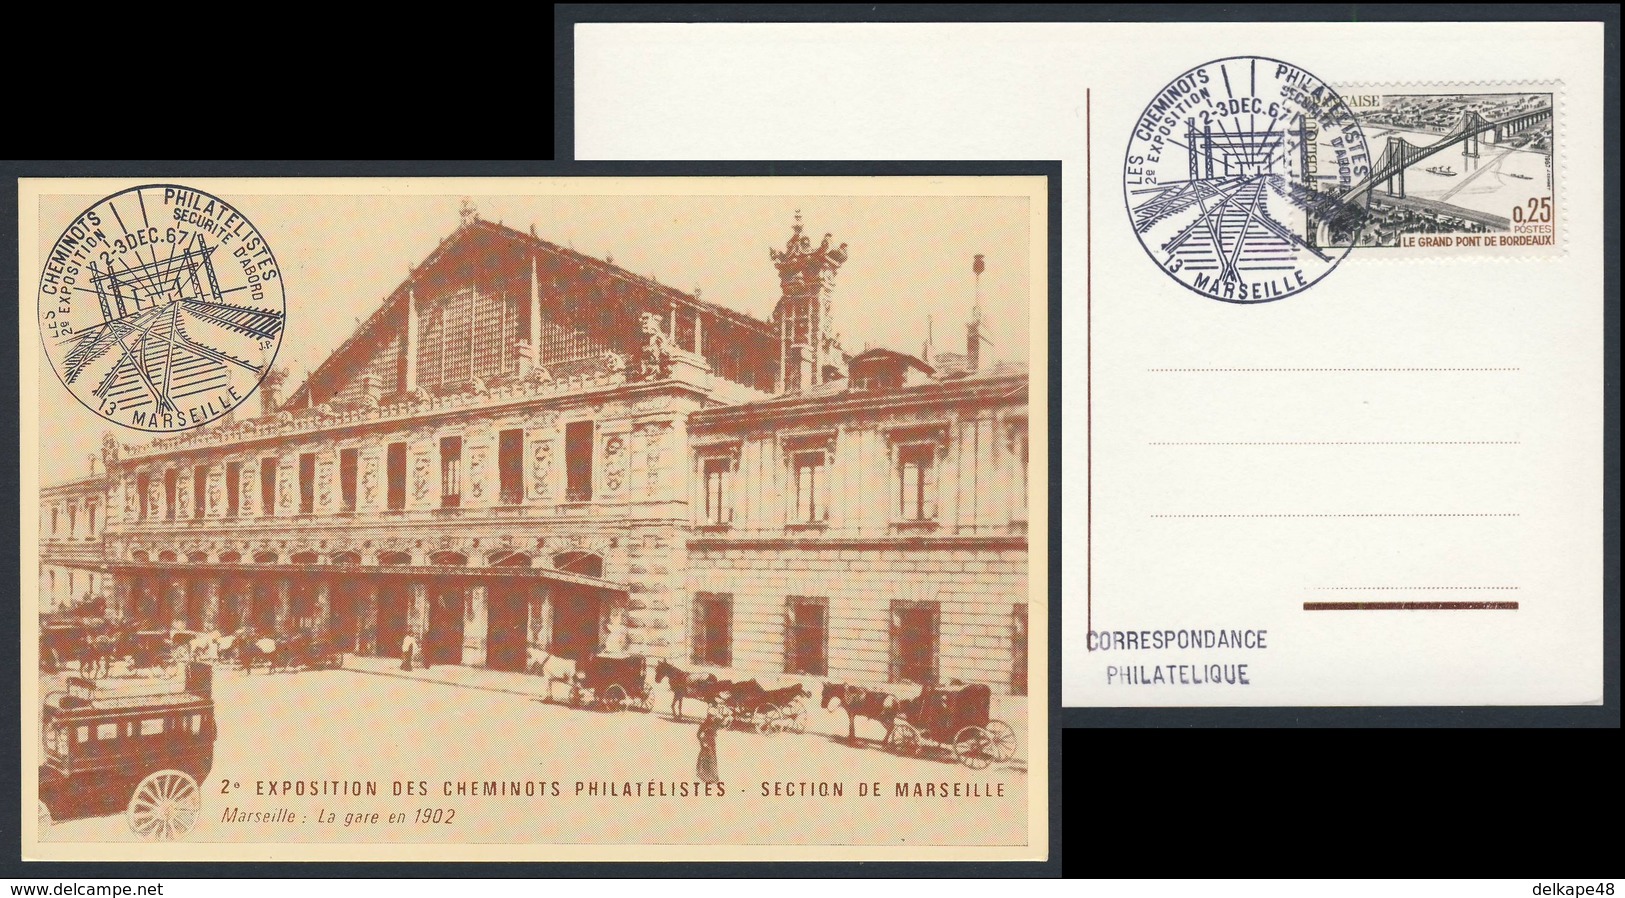 France Rep. Française 1967 Postcard / Postkarte / Carte Postale - Gare Marseille (1902) / Railway Station / Bahnhofe - Treinen